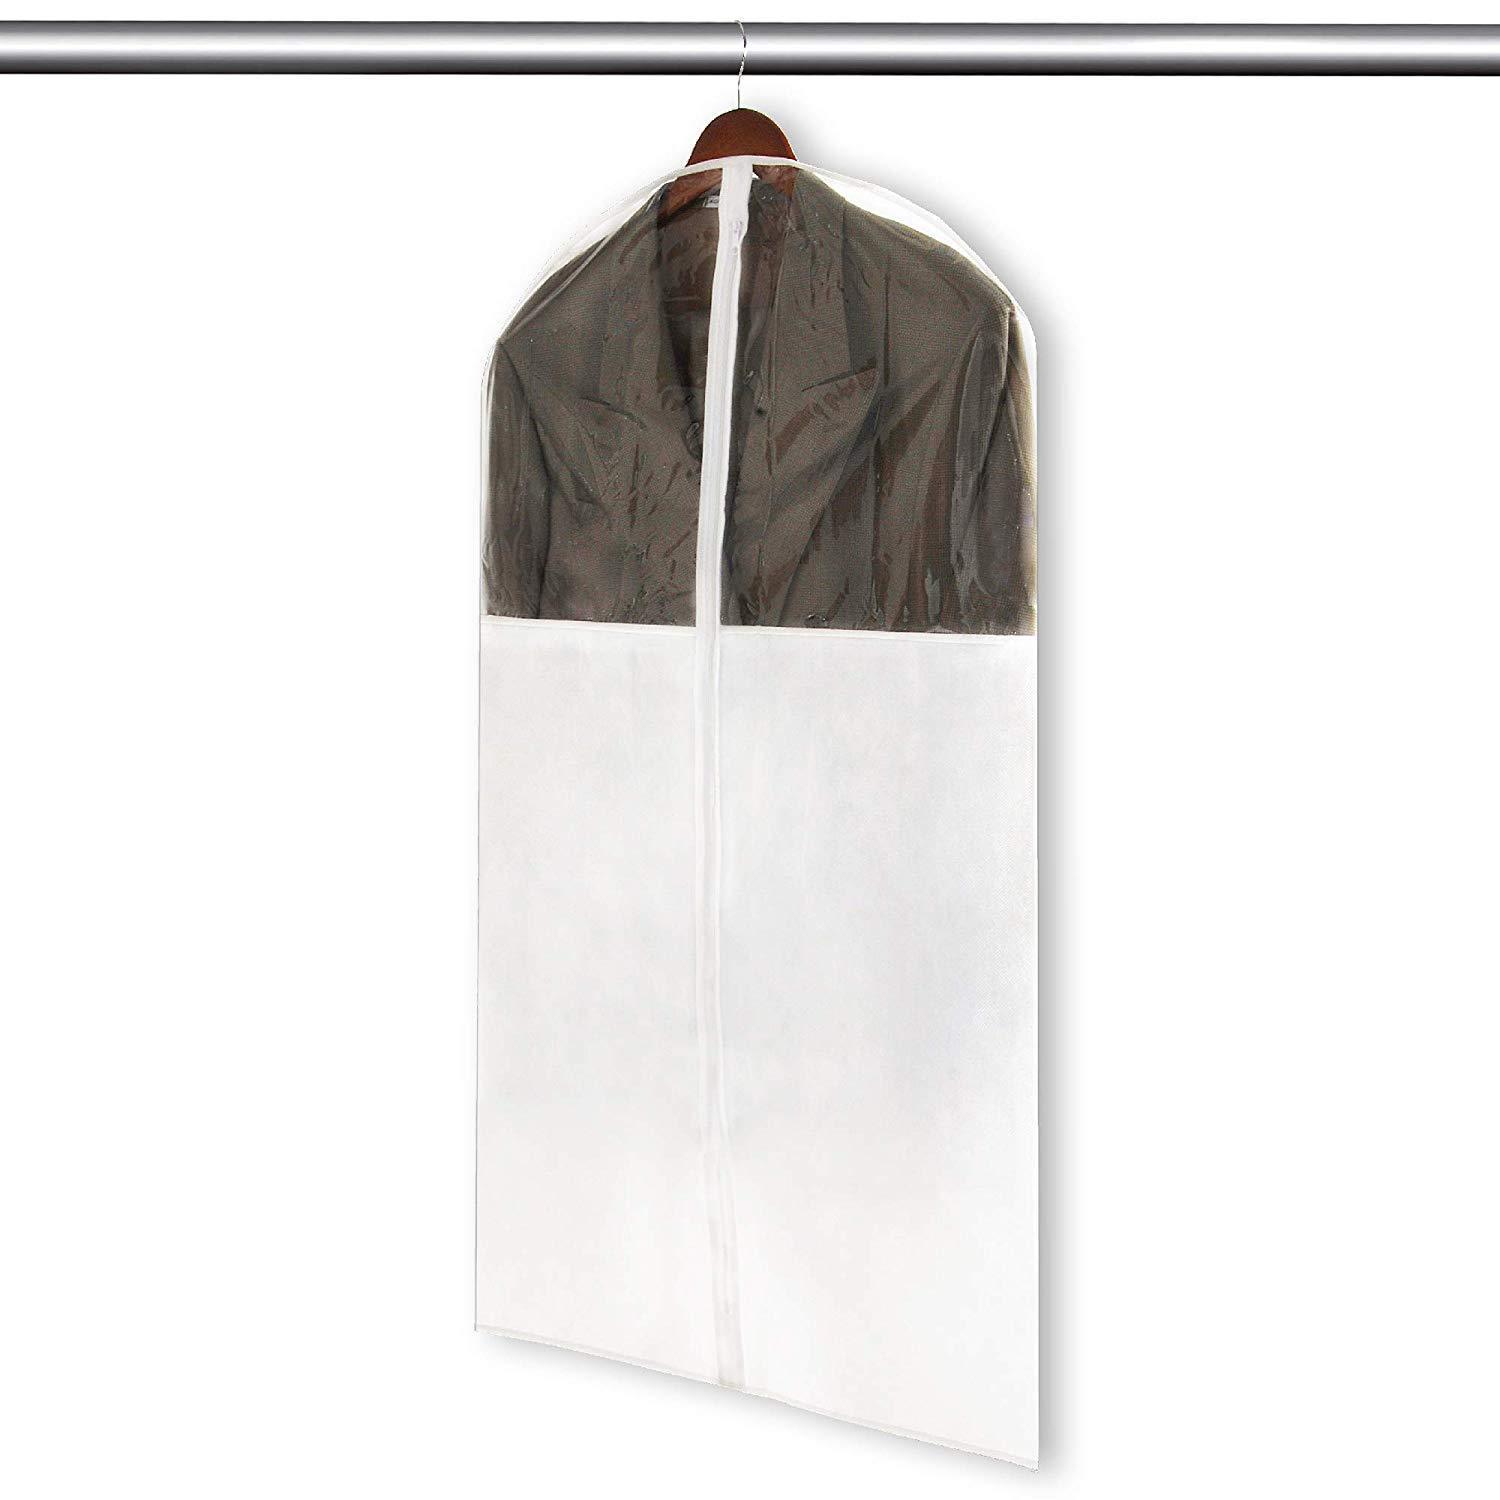 Garment Bag Hanger Clothing Storage Cover - Suits, Dresses Travel Closet Organization  Smart Design® 1